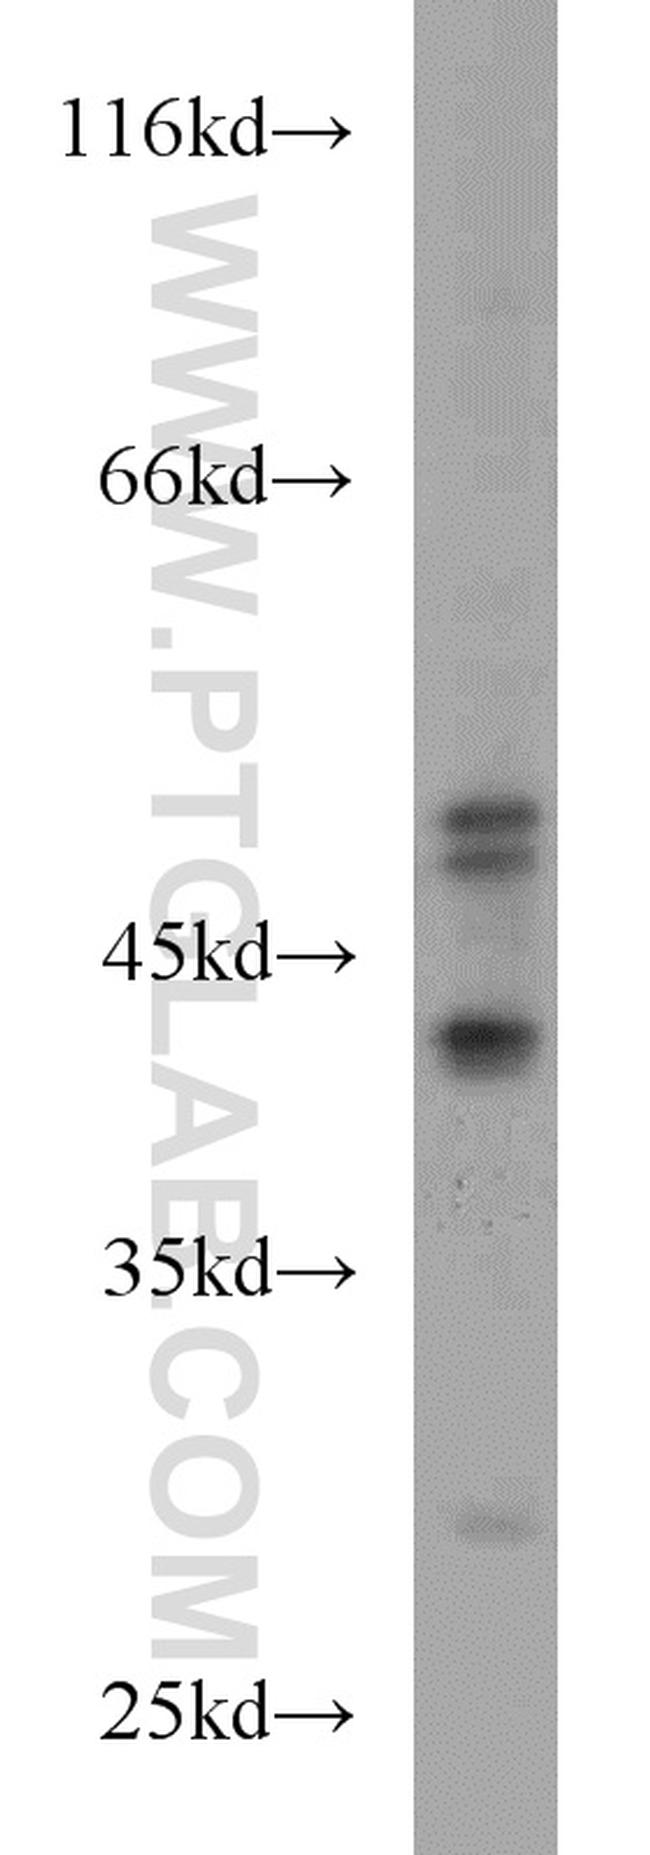 GABPB1 Antibody in Western Blot (WB)